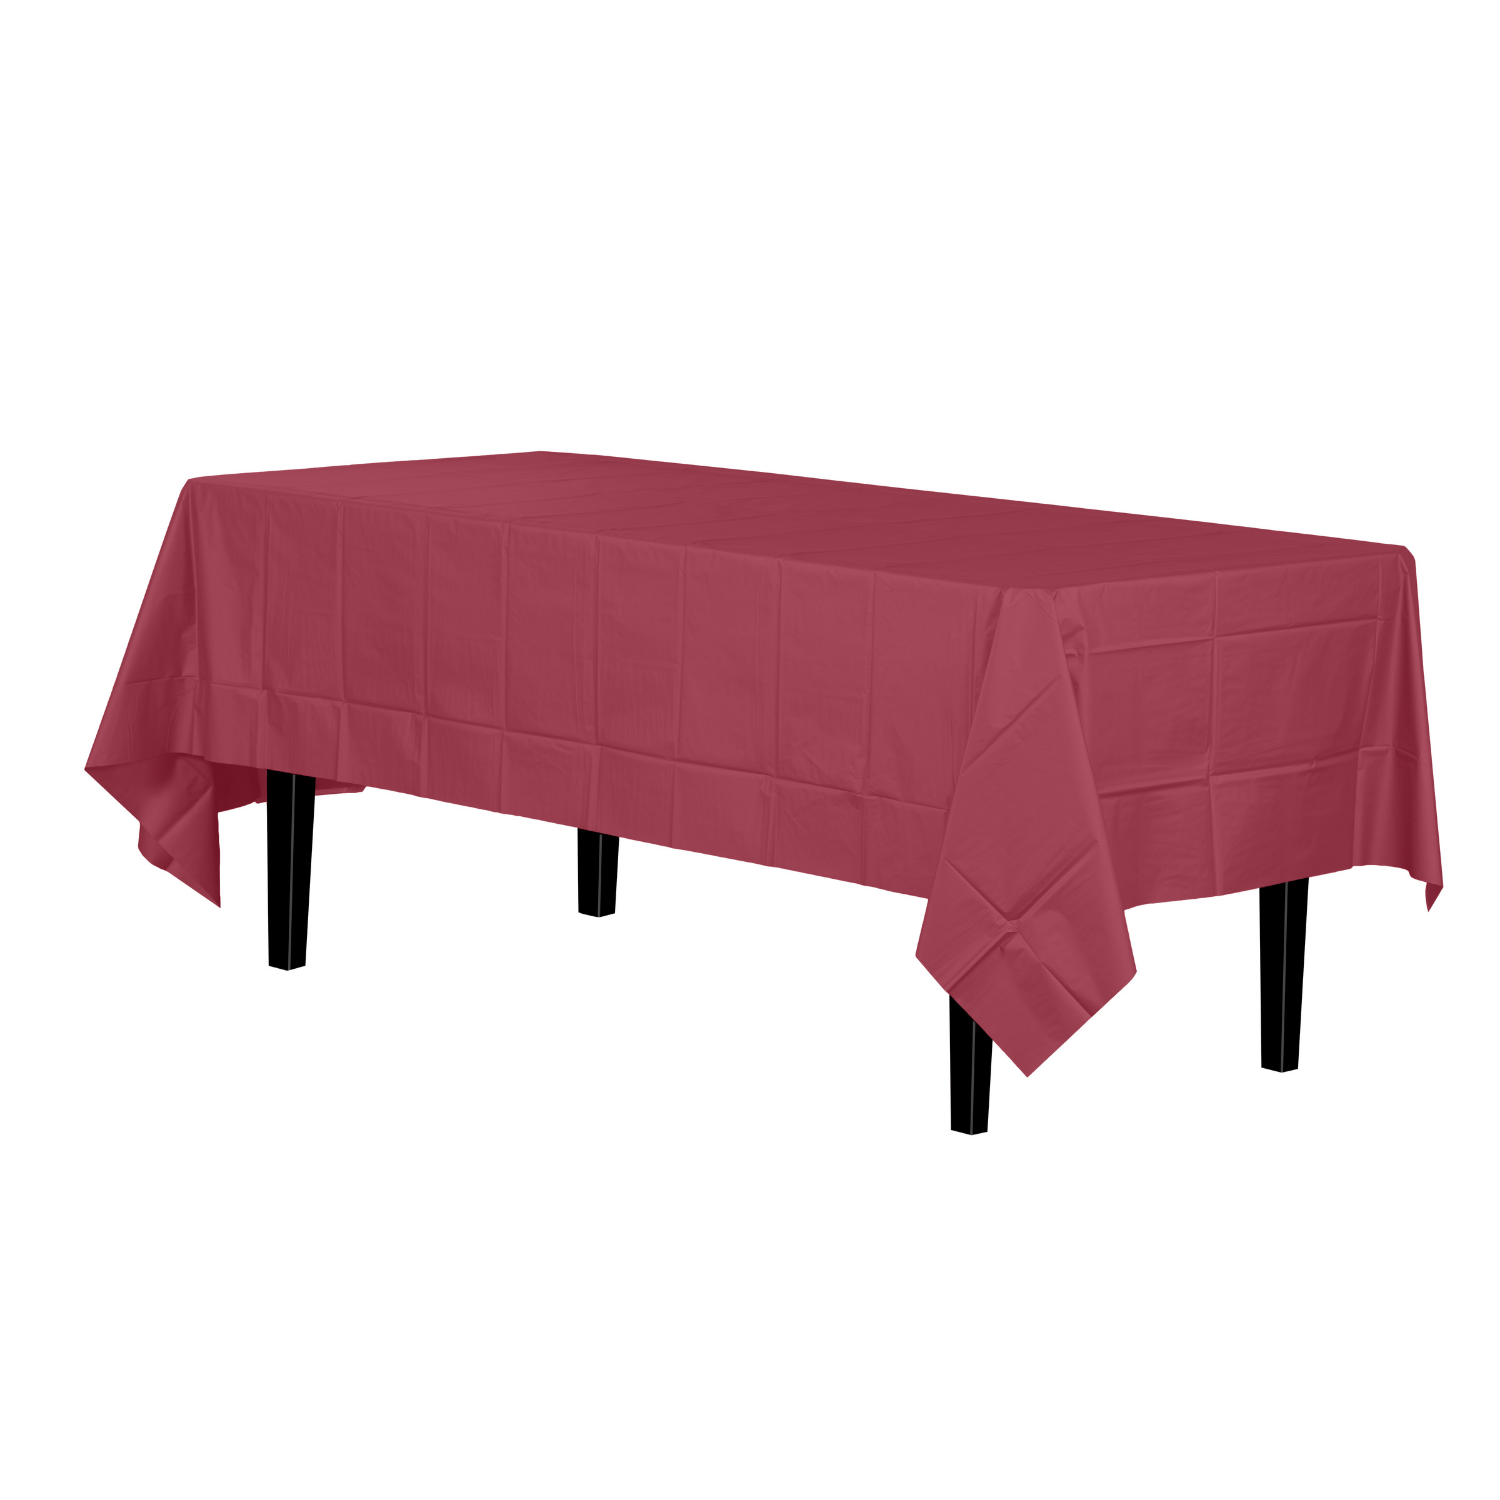 Premium Burgundy Plastic Tablecloth | 96 Count - Yom Tov Settings